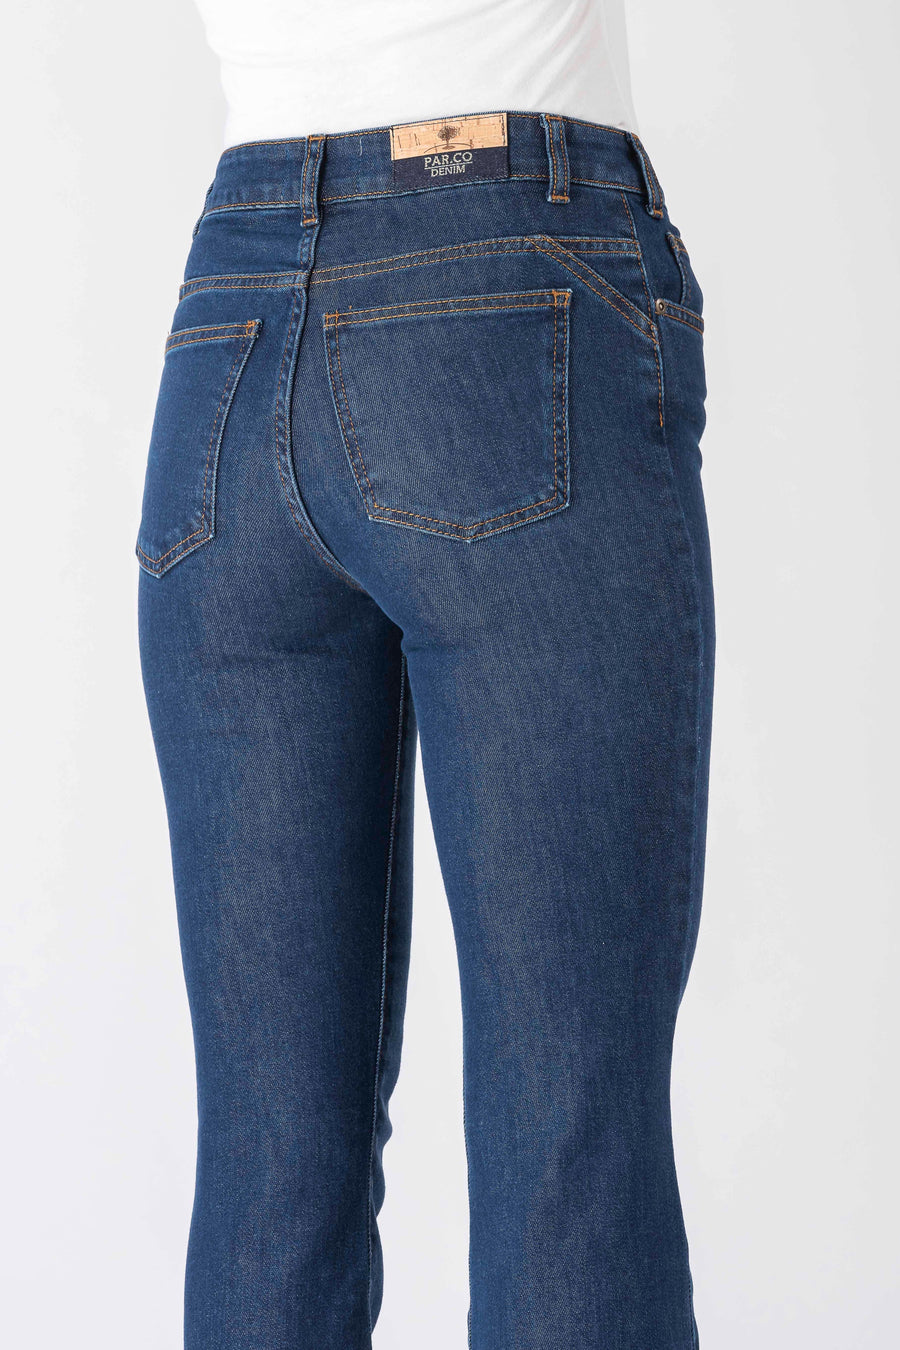 Par.co DENIM Woman Jeans Daisy Medium Boot cut Jeans βιώσιμη μόδα ηθική μόδα